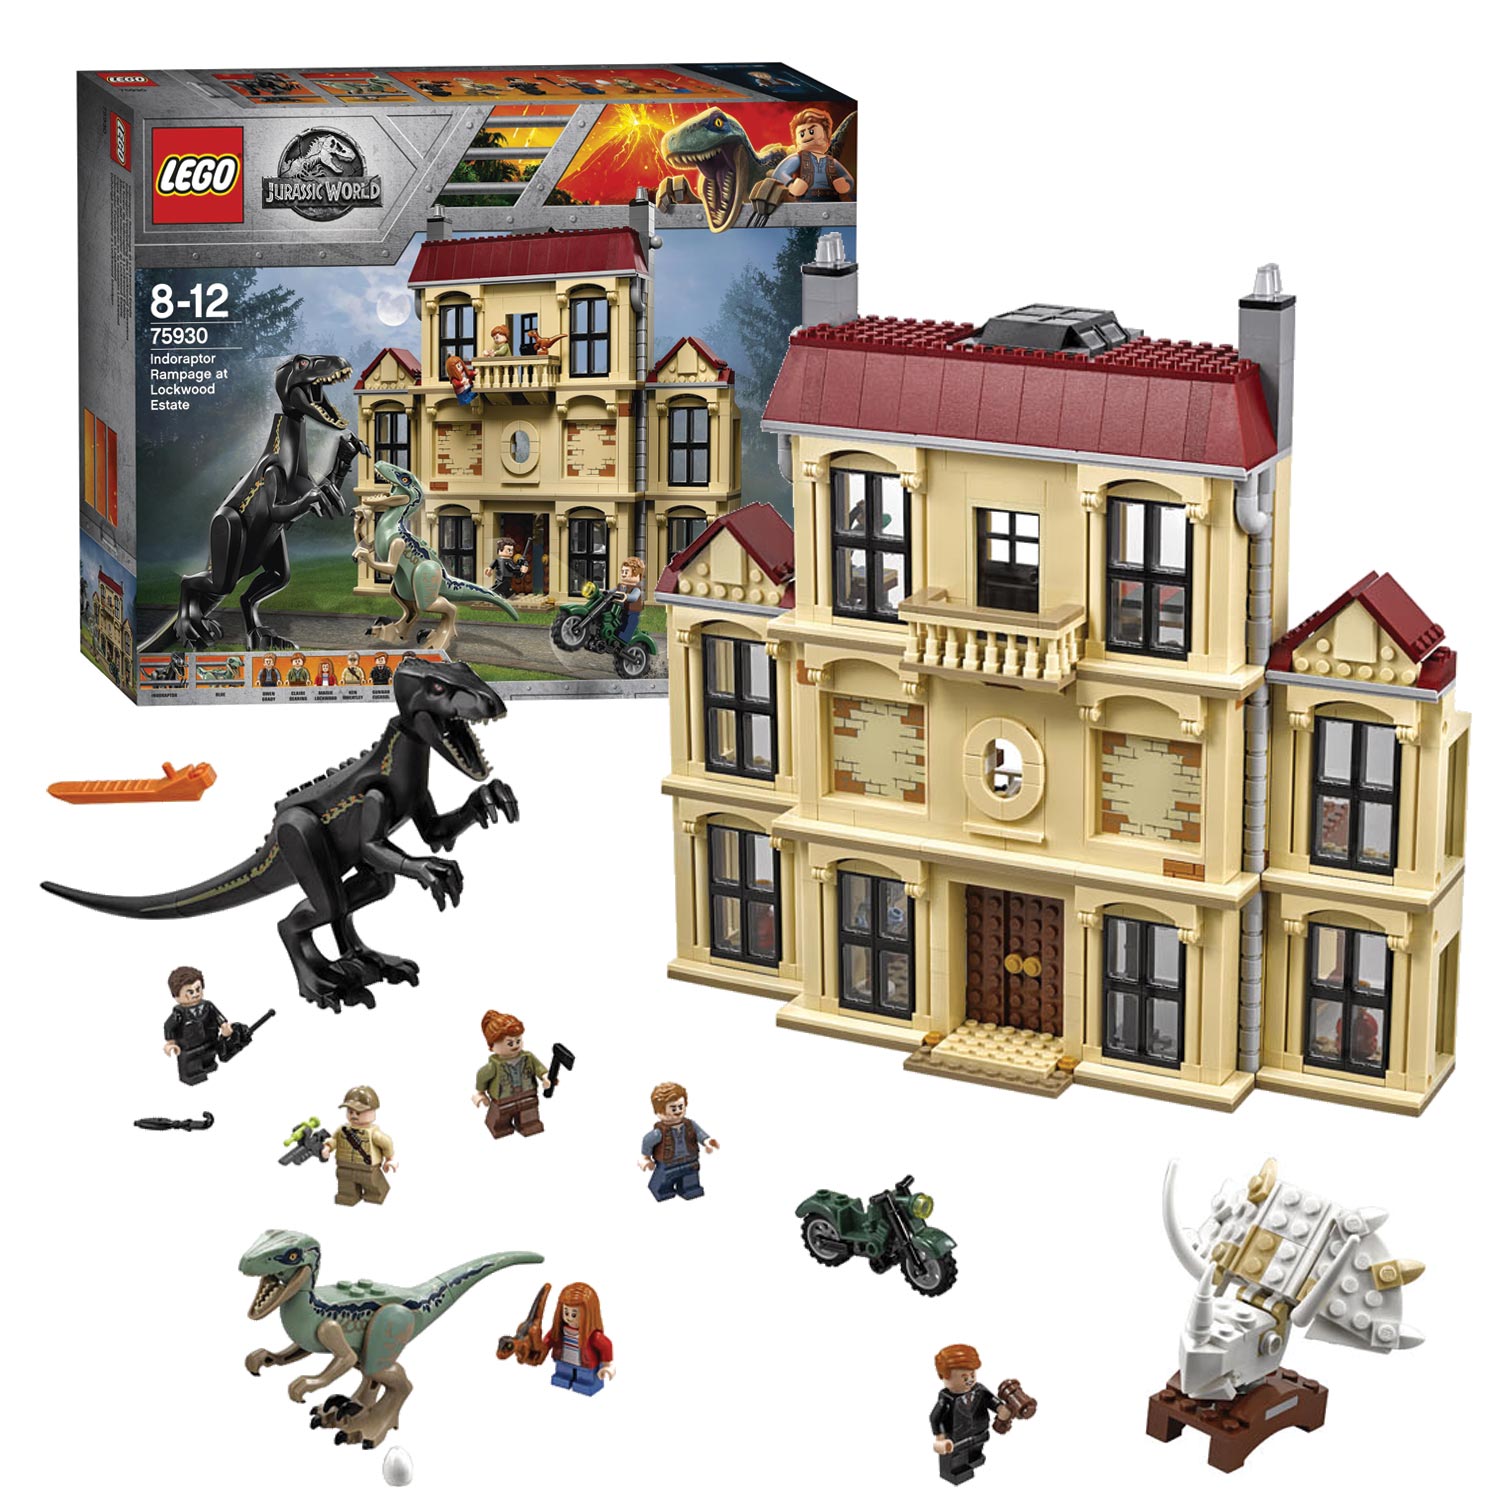 LEGO Jurassic World 75930 Indoraptorchaos at Lockwood Estat